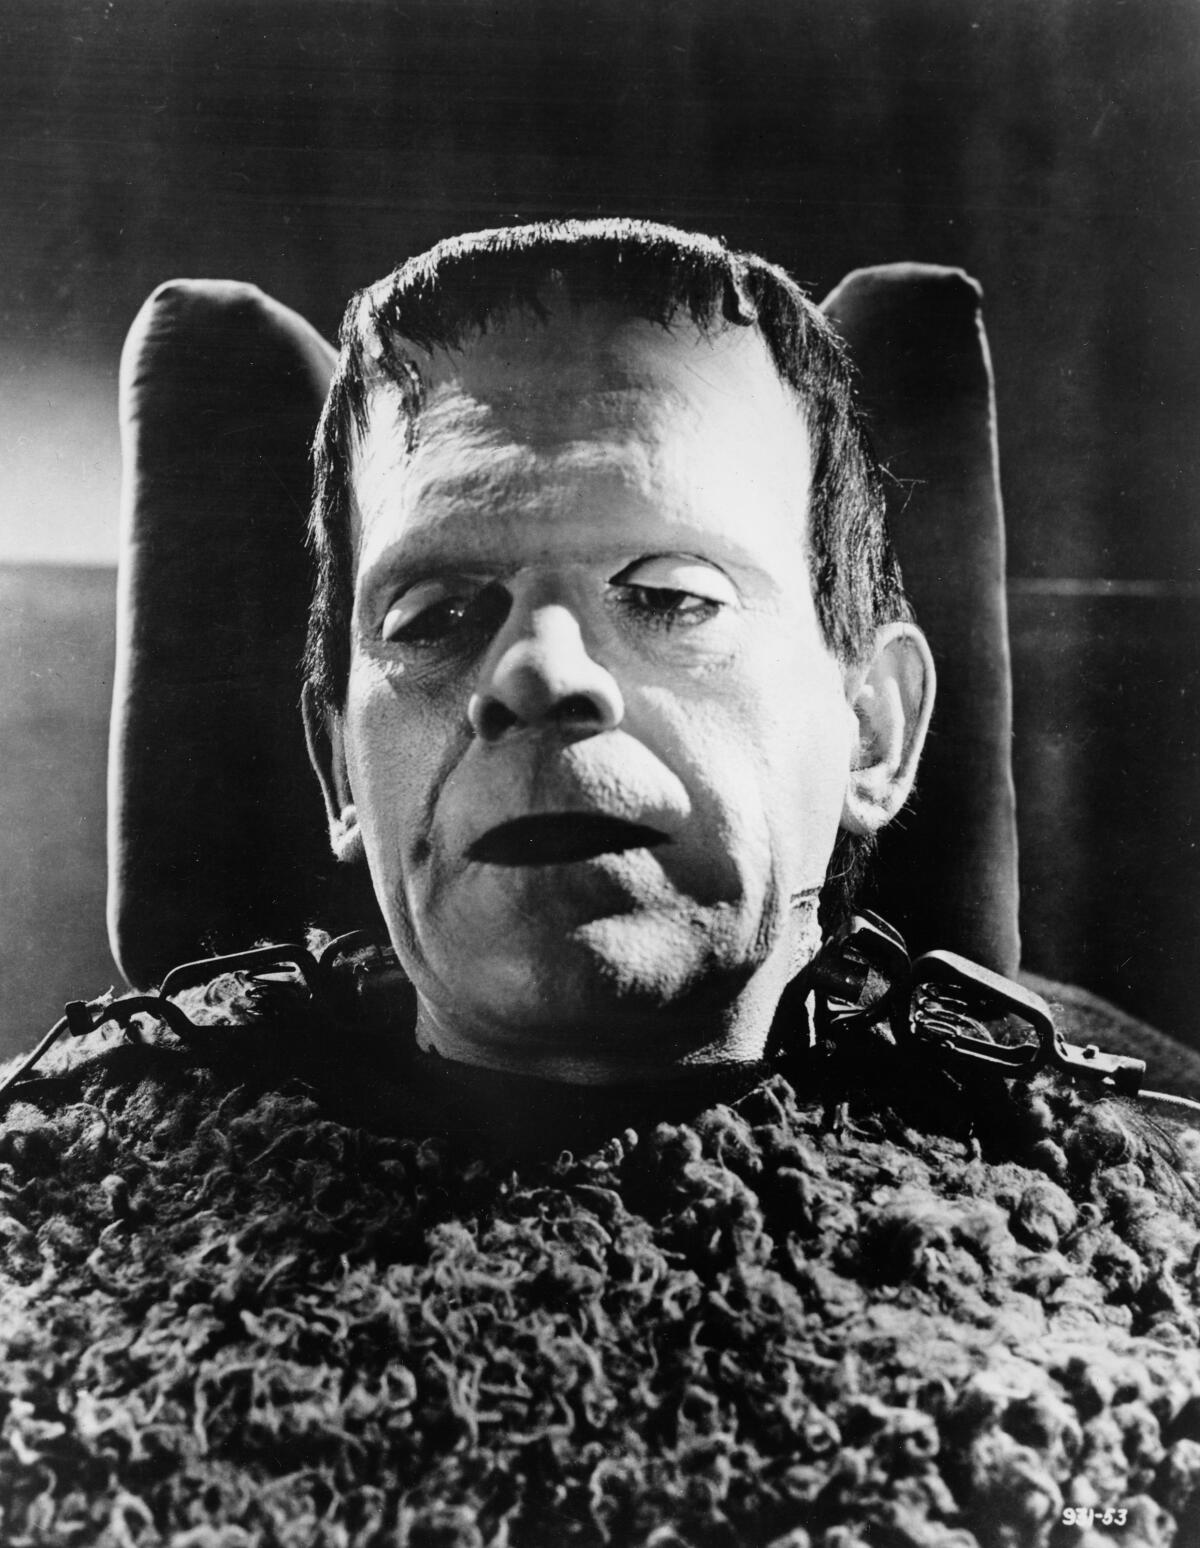 A closeup black-and-white photo of Boris Karloff as Frankenstein's Monster.